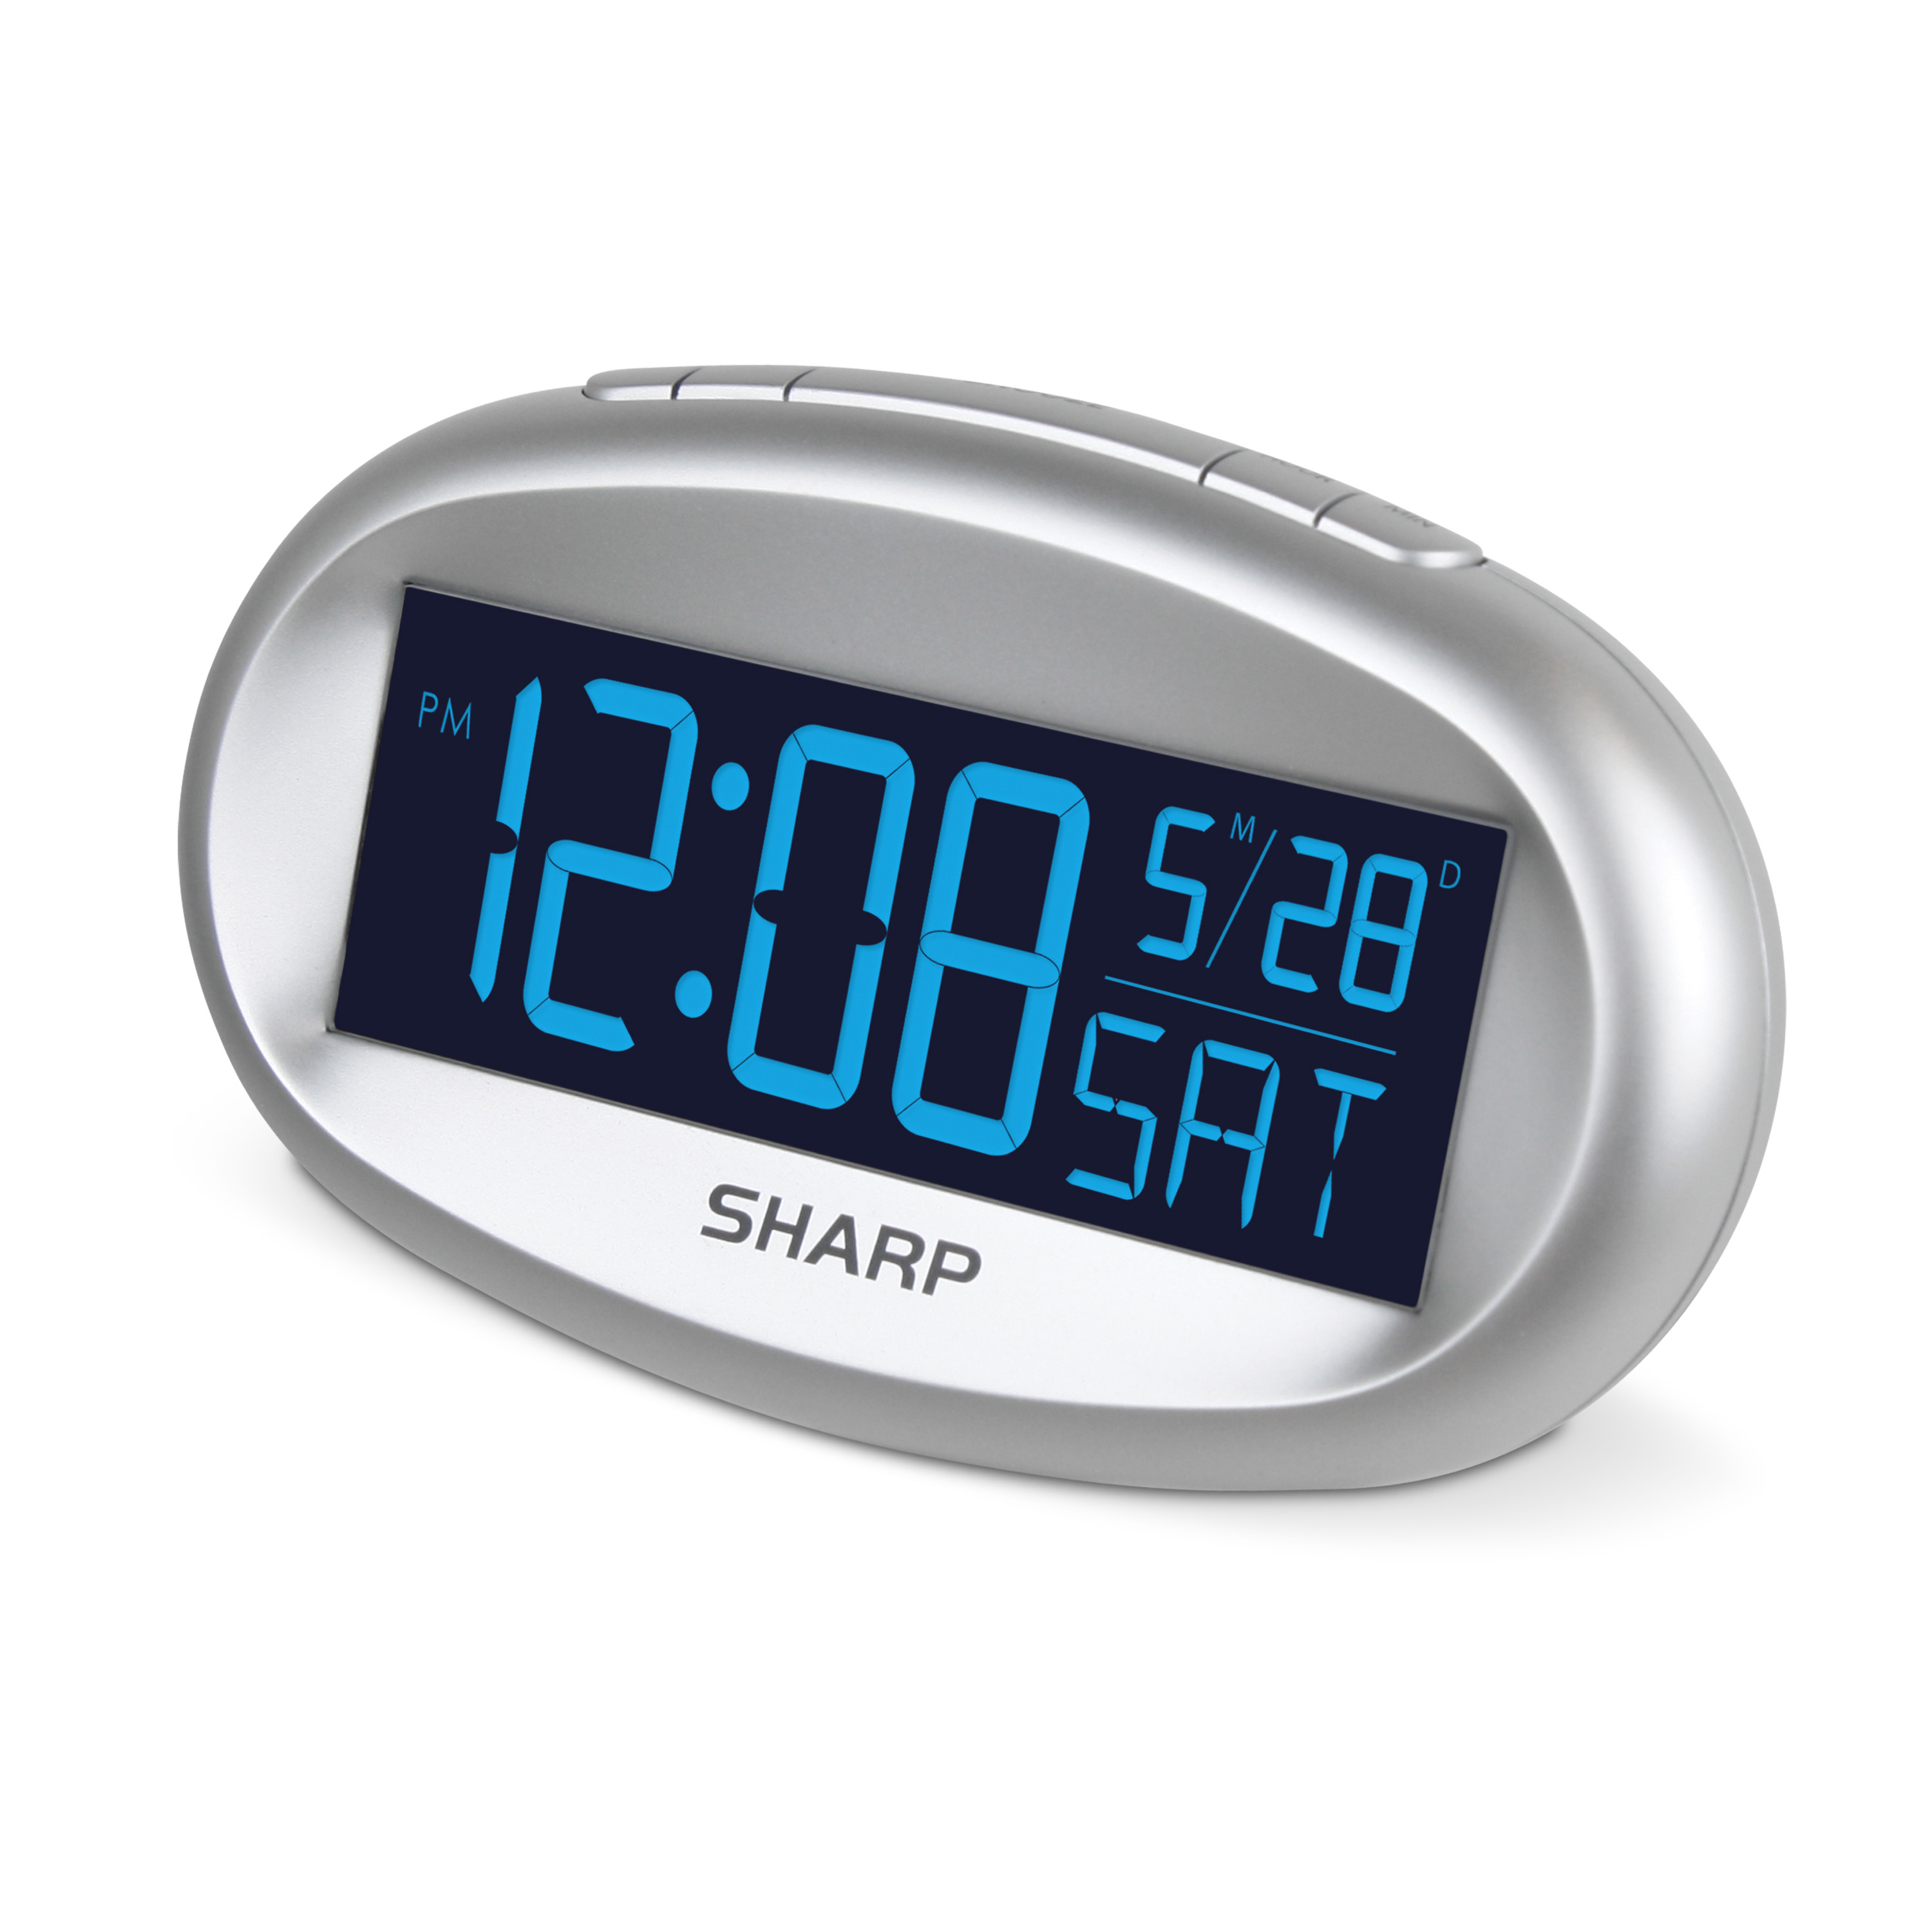 Sharp 1.2 Blue automatic time set alarm clock with calendar